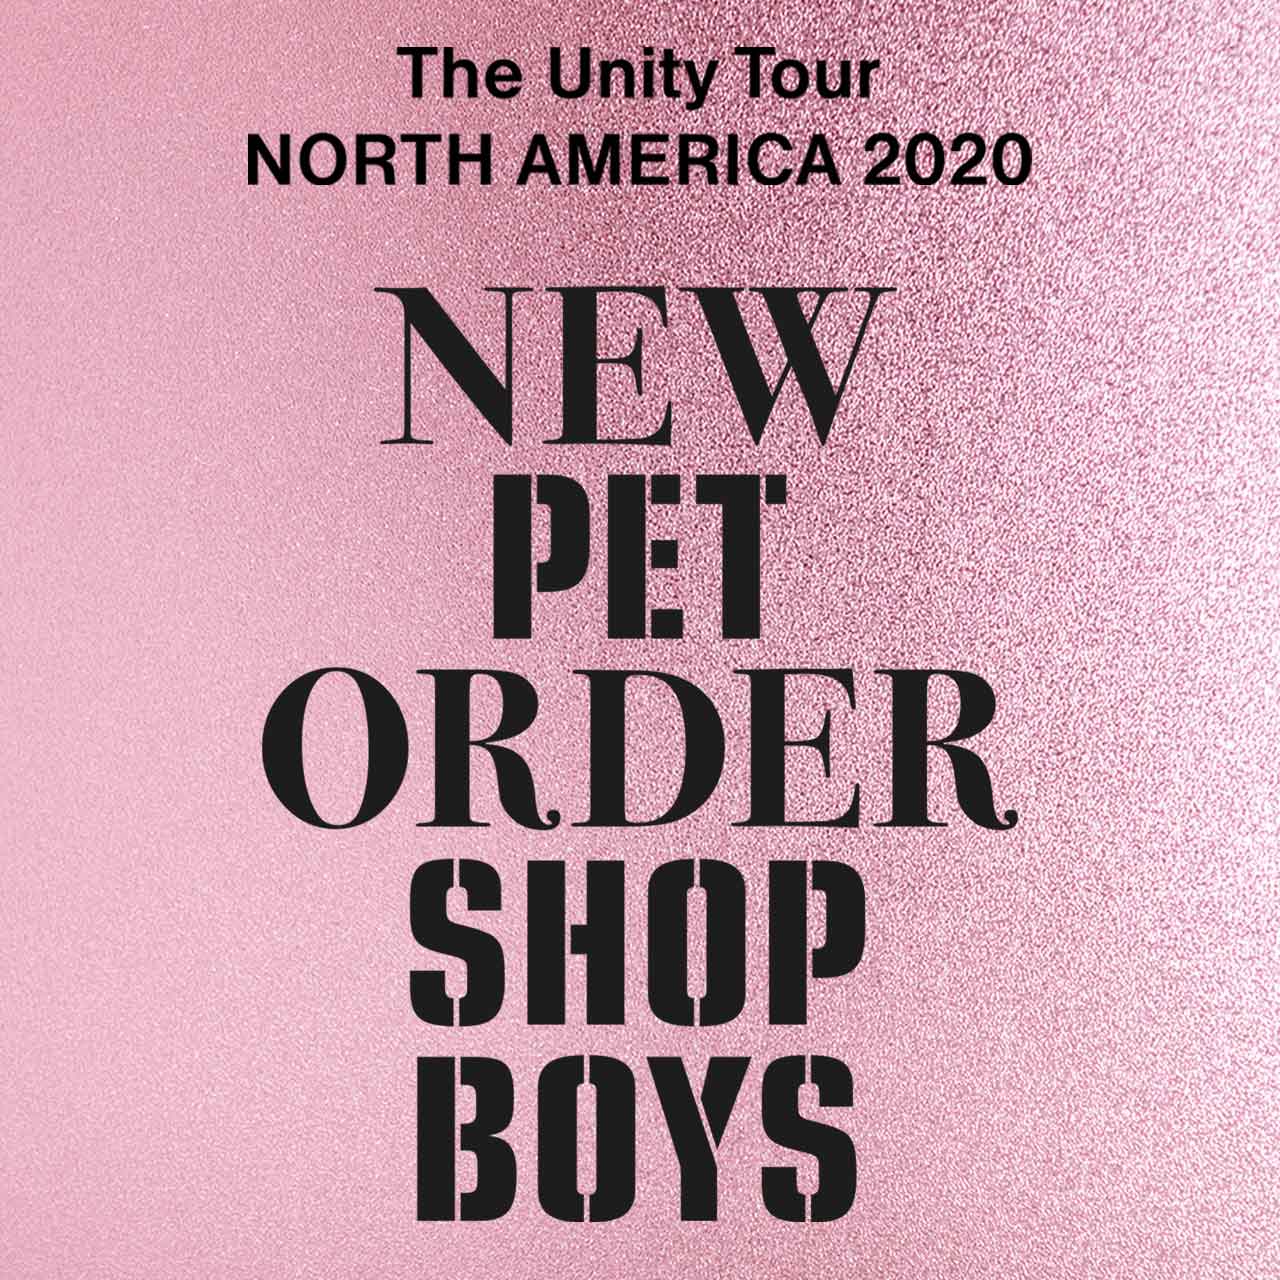 The Unity Tour North America 2020